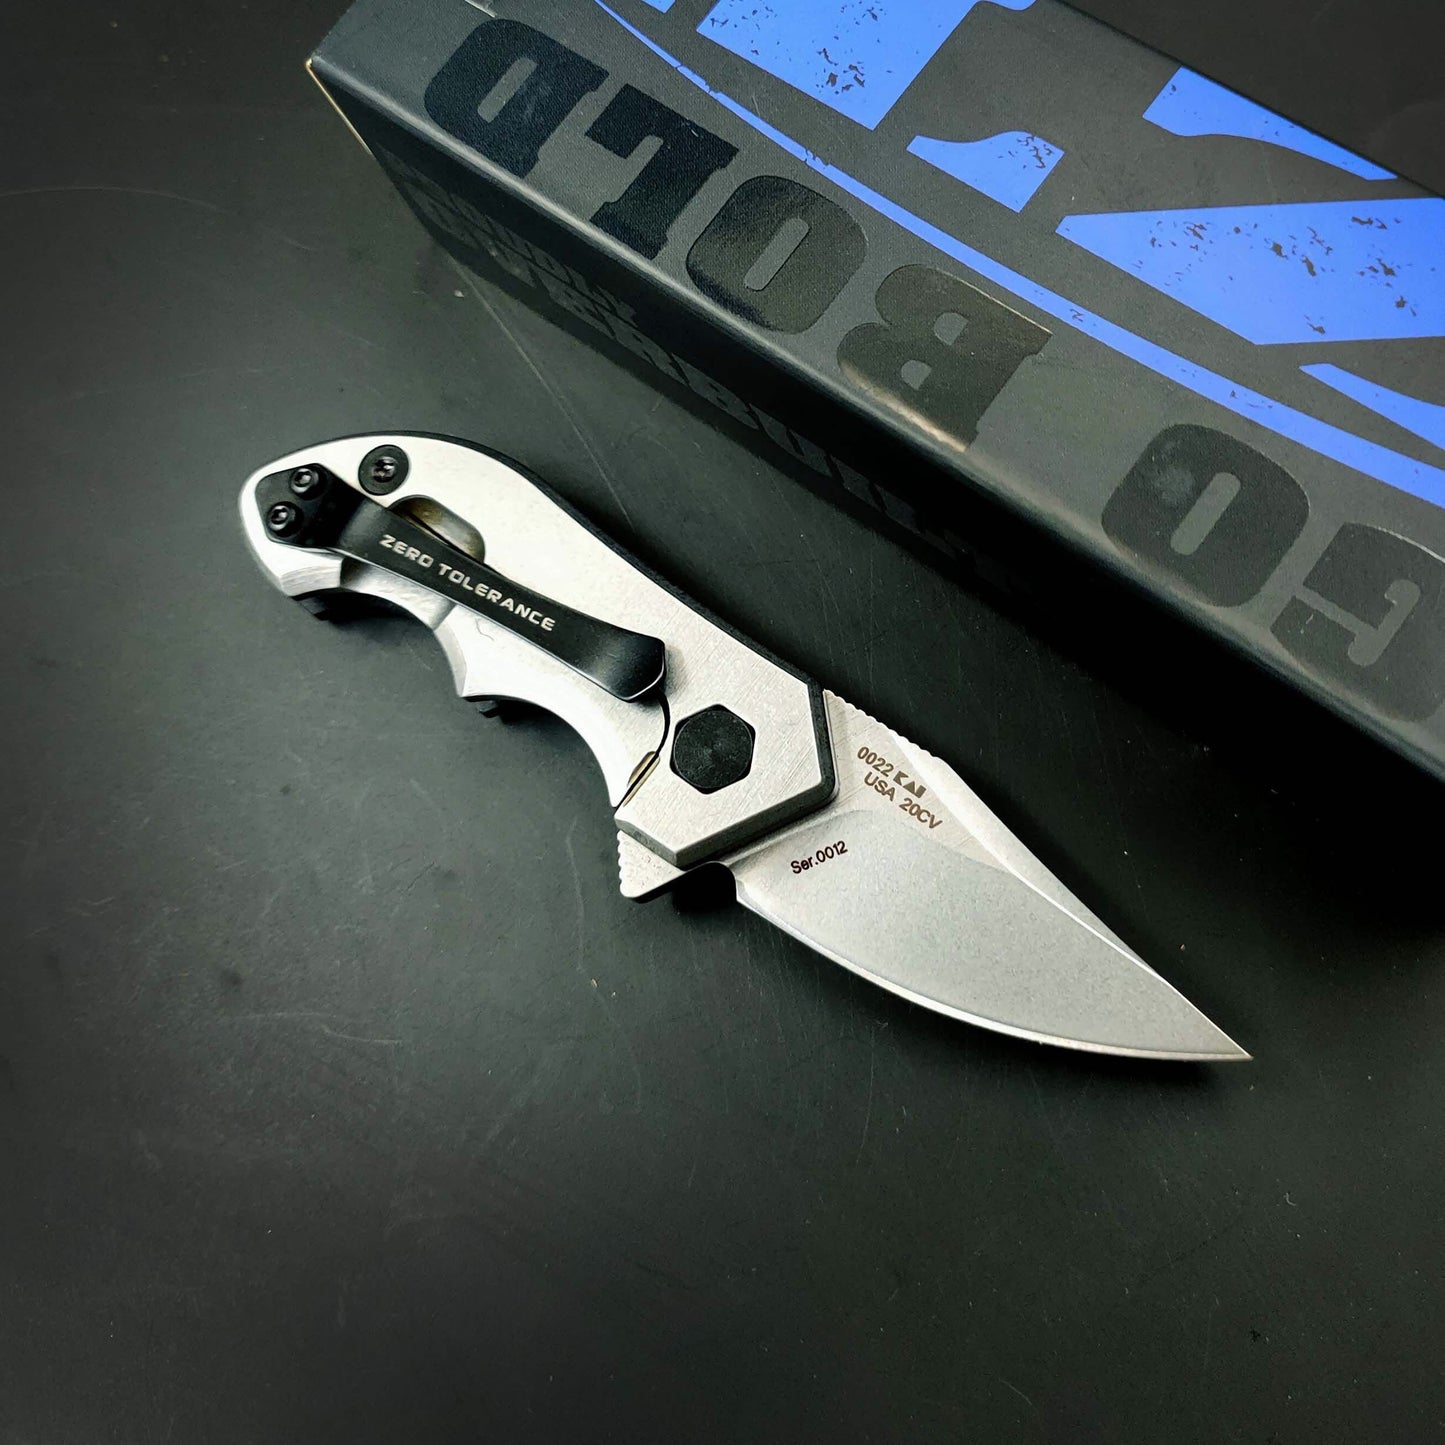 ZT ZERO TOLERANCE 0022 Tactical Knife Spring Assist Opening Folding Knife CPM-20CV Blade Carbon Fiber Handle Flipper Knife Outdoor Camping Hunting Pocket Knife with Clip